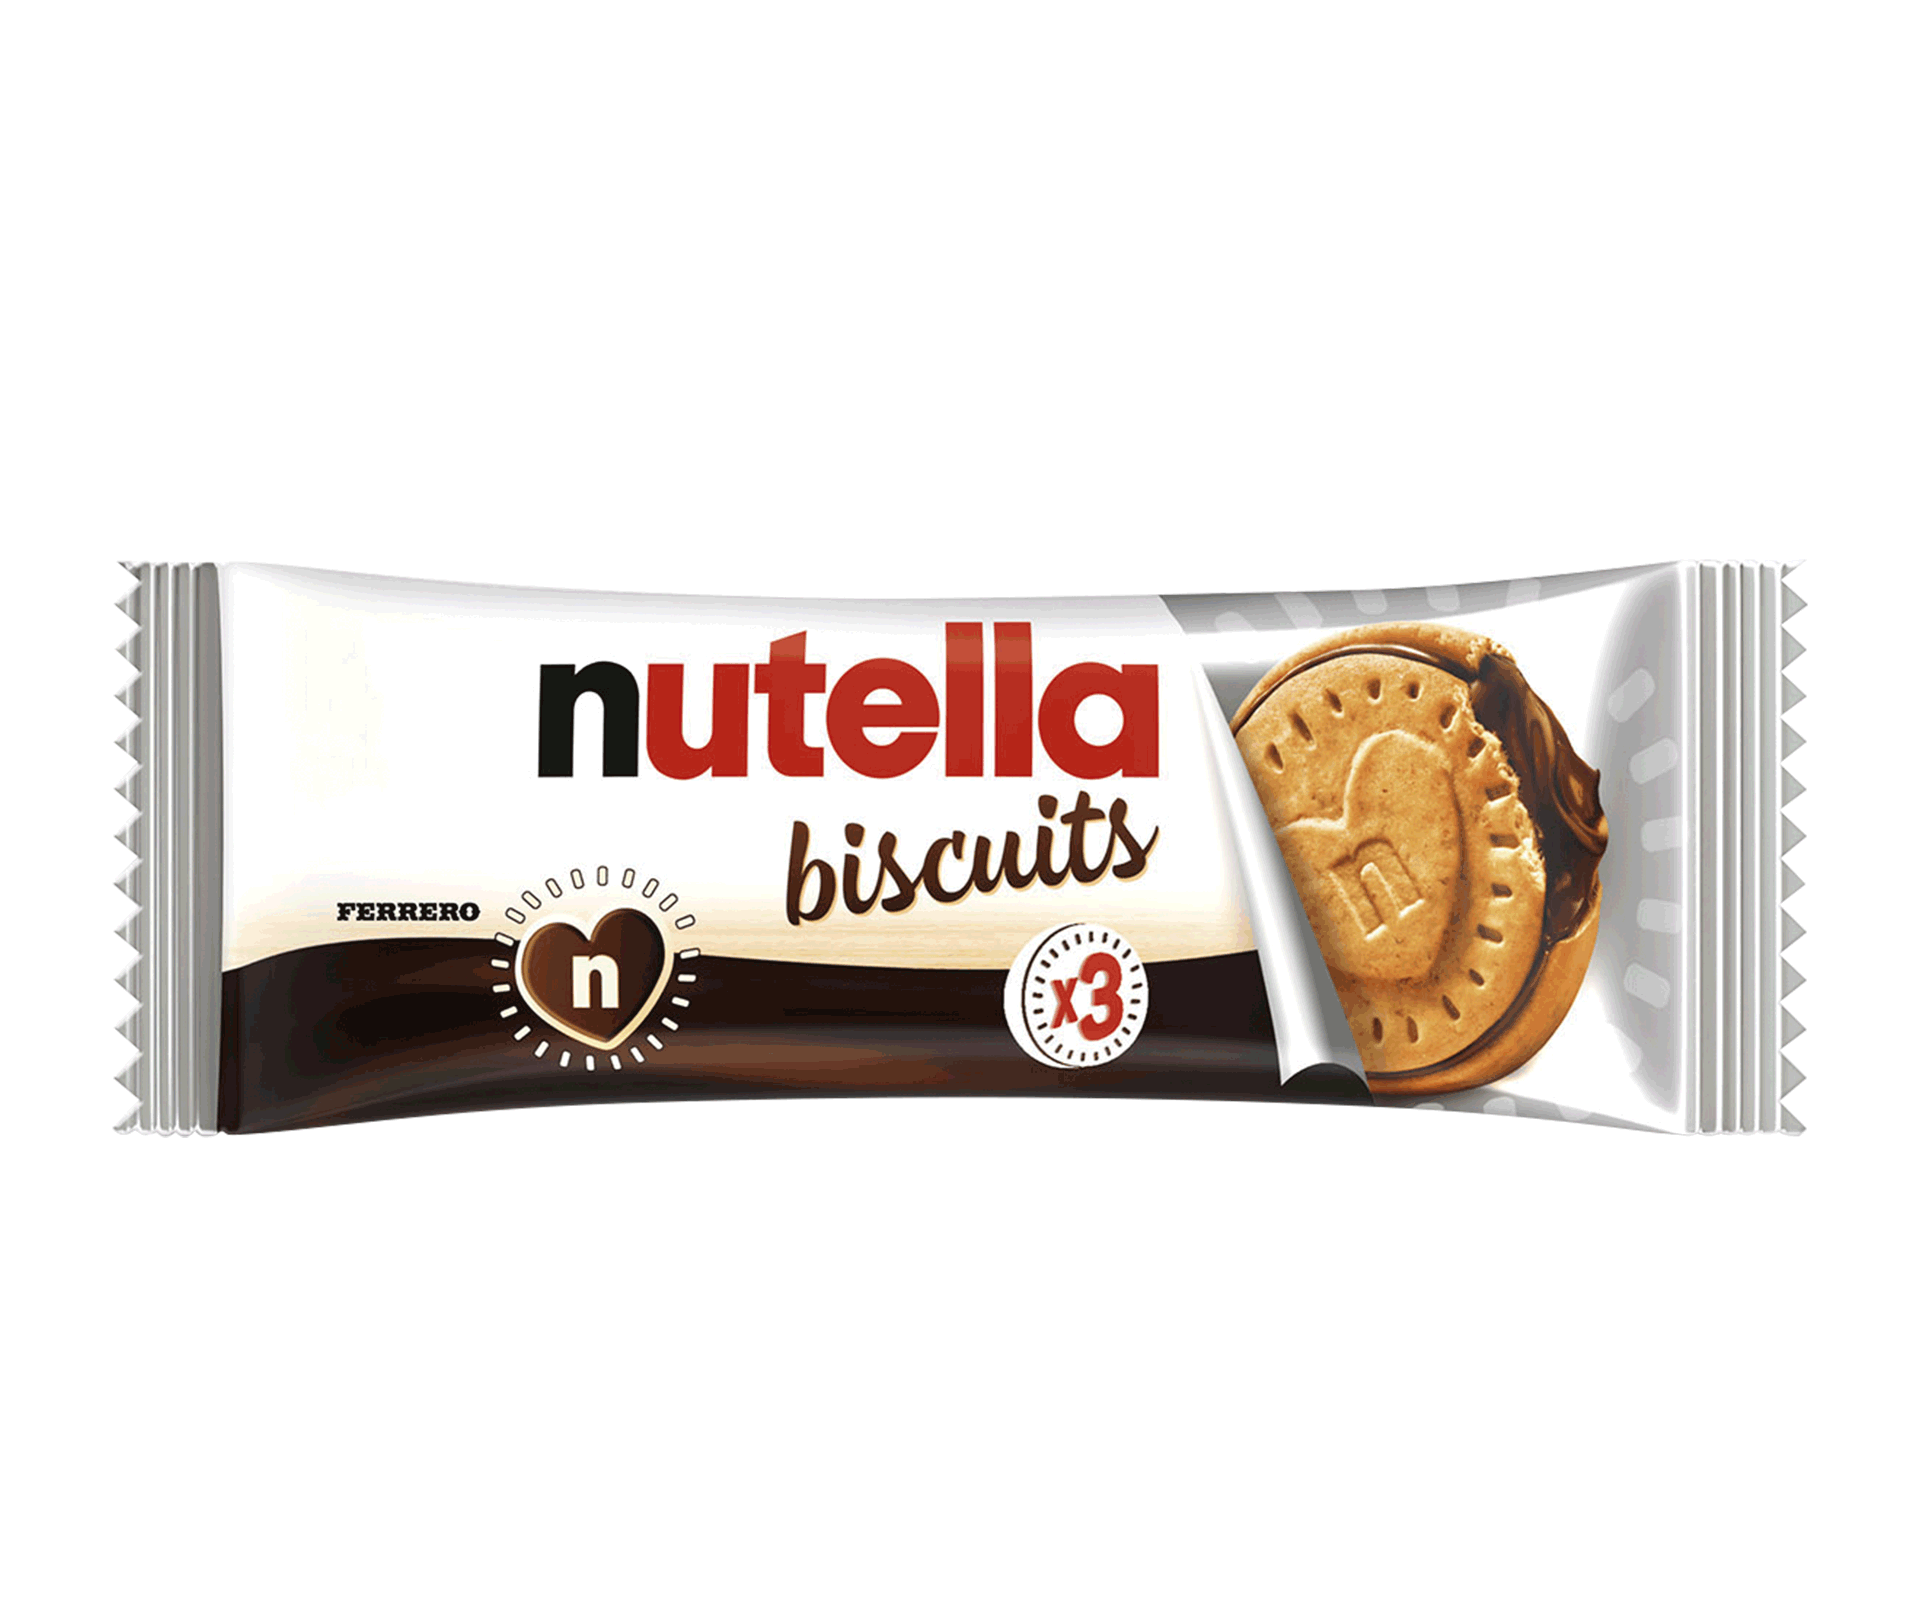 Nutella biscuits x3